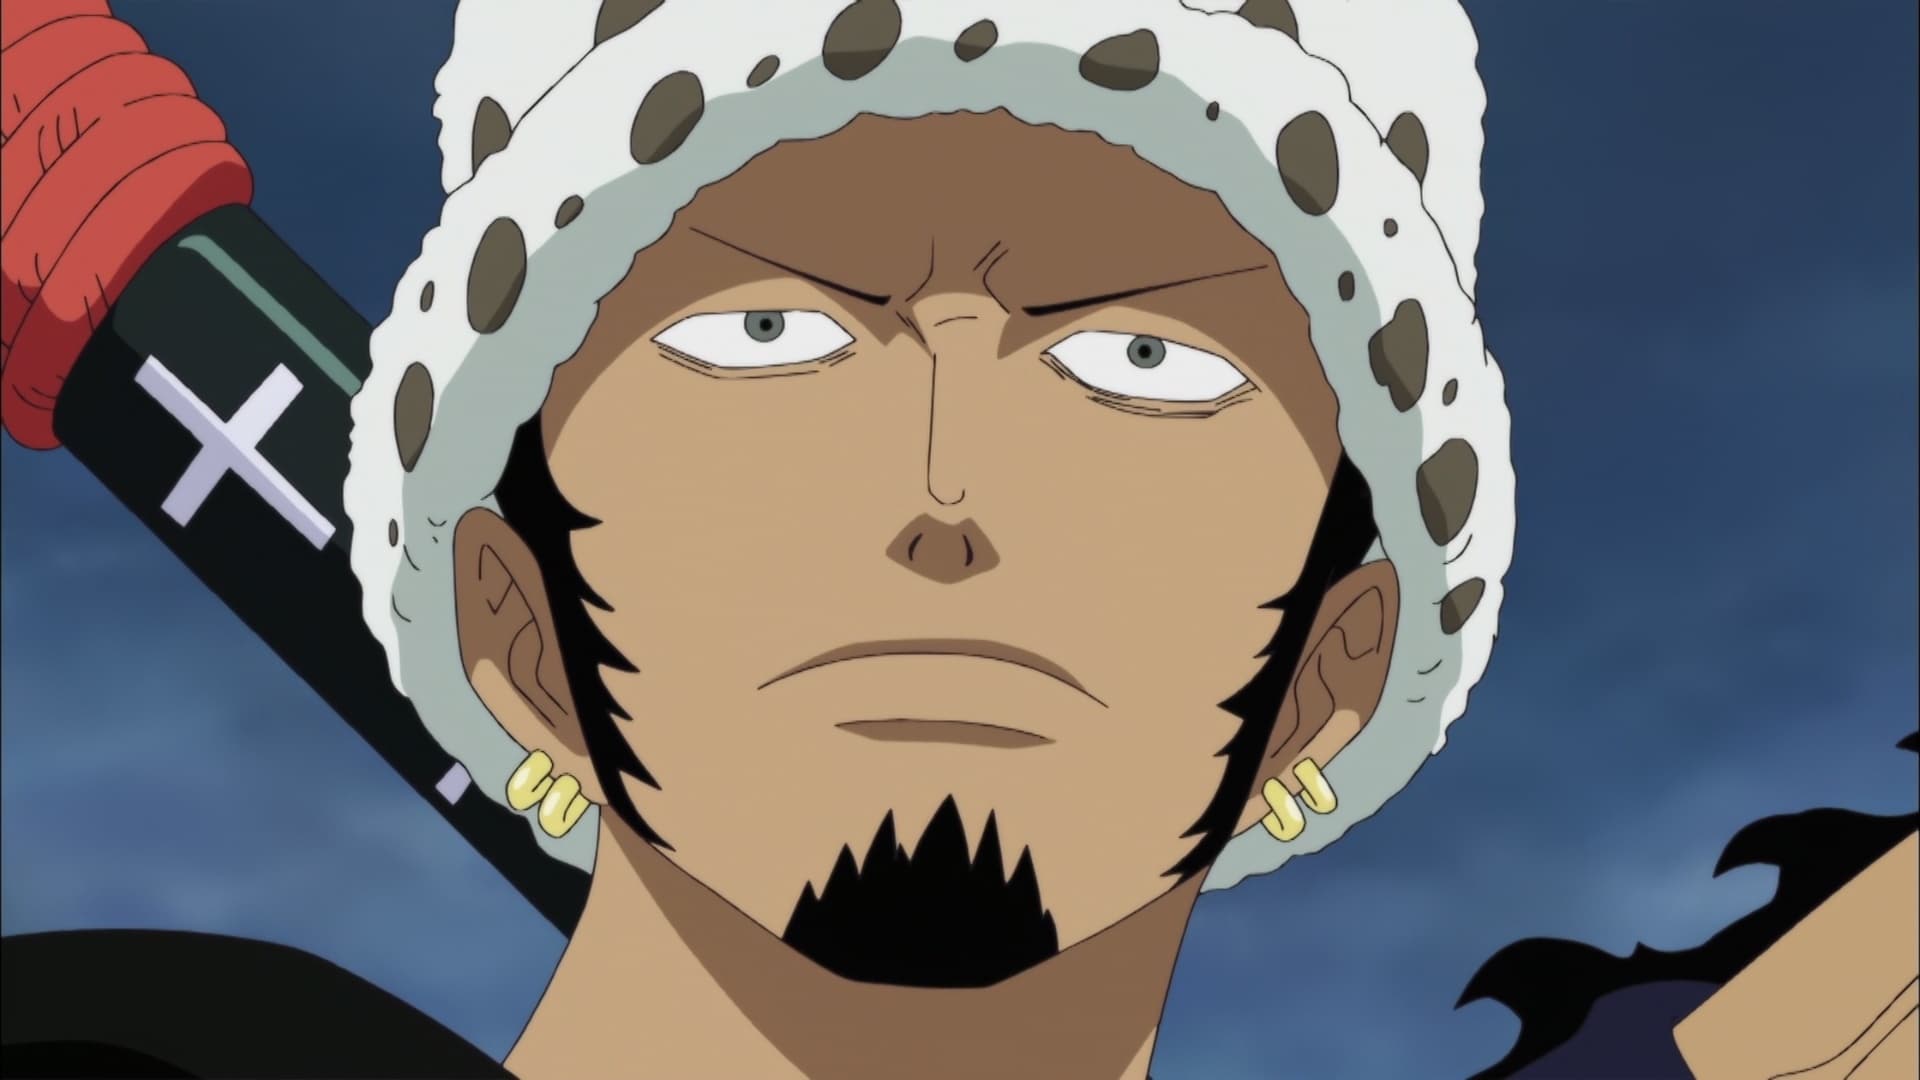 One Piece Season 0 :Episode 28  A Project to Fully Enjoy! 'Surgeon of Death' Trafalgar Law